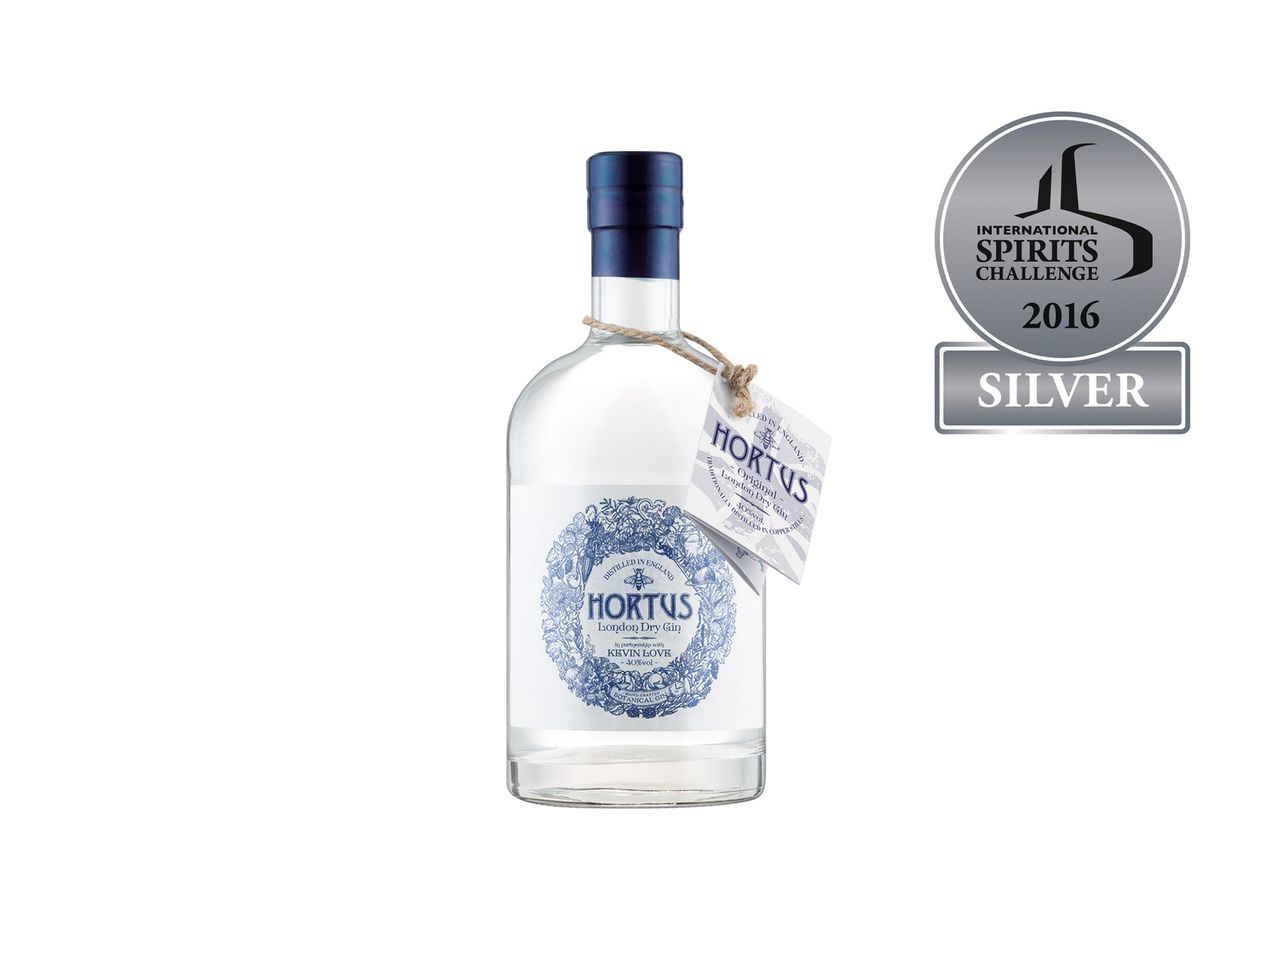 Go to full screen view: Hortus Artisan London Dry Gin - Image 1